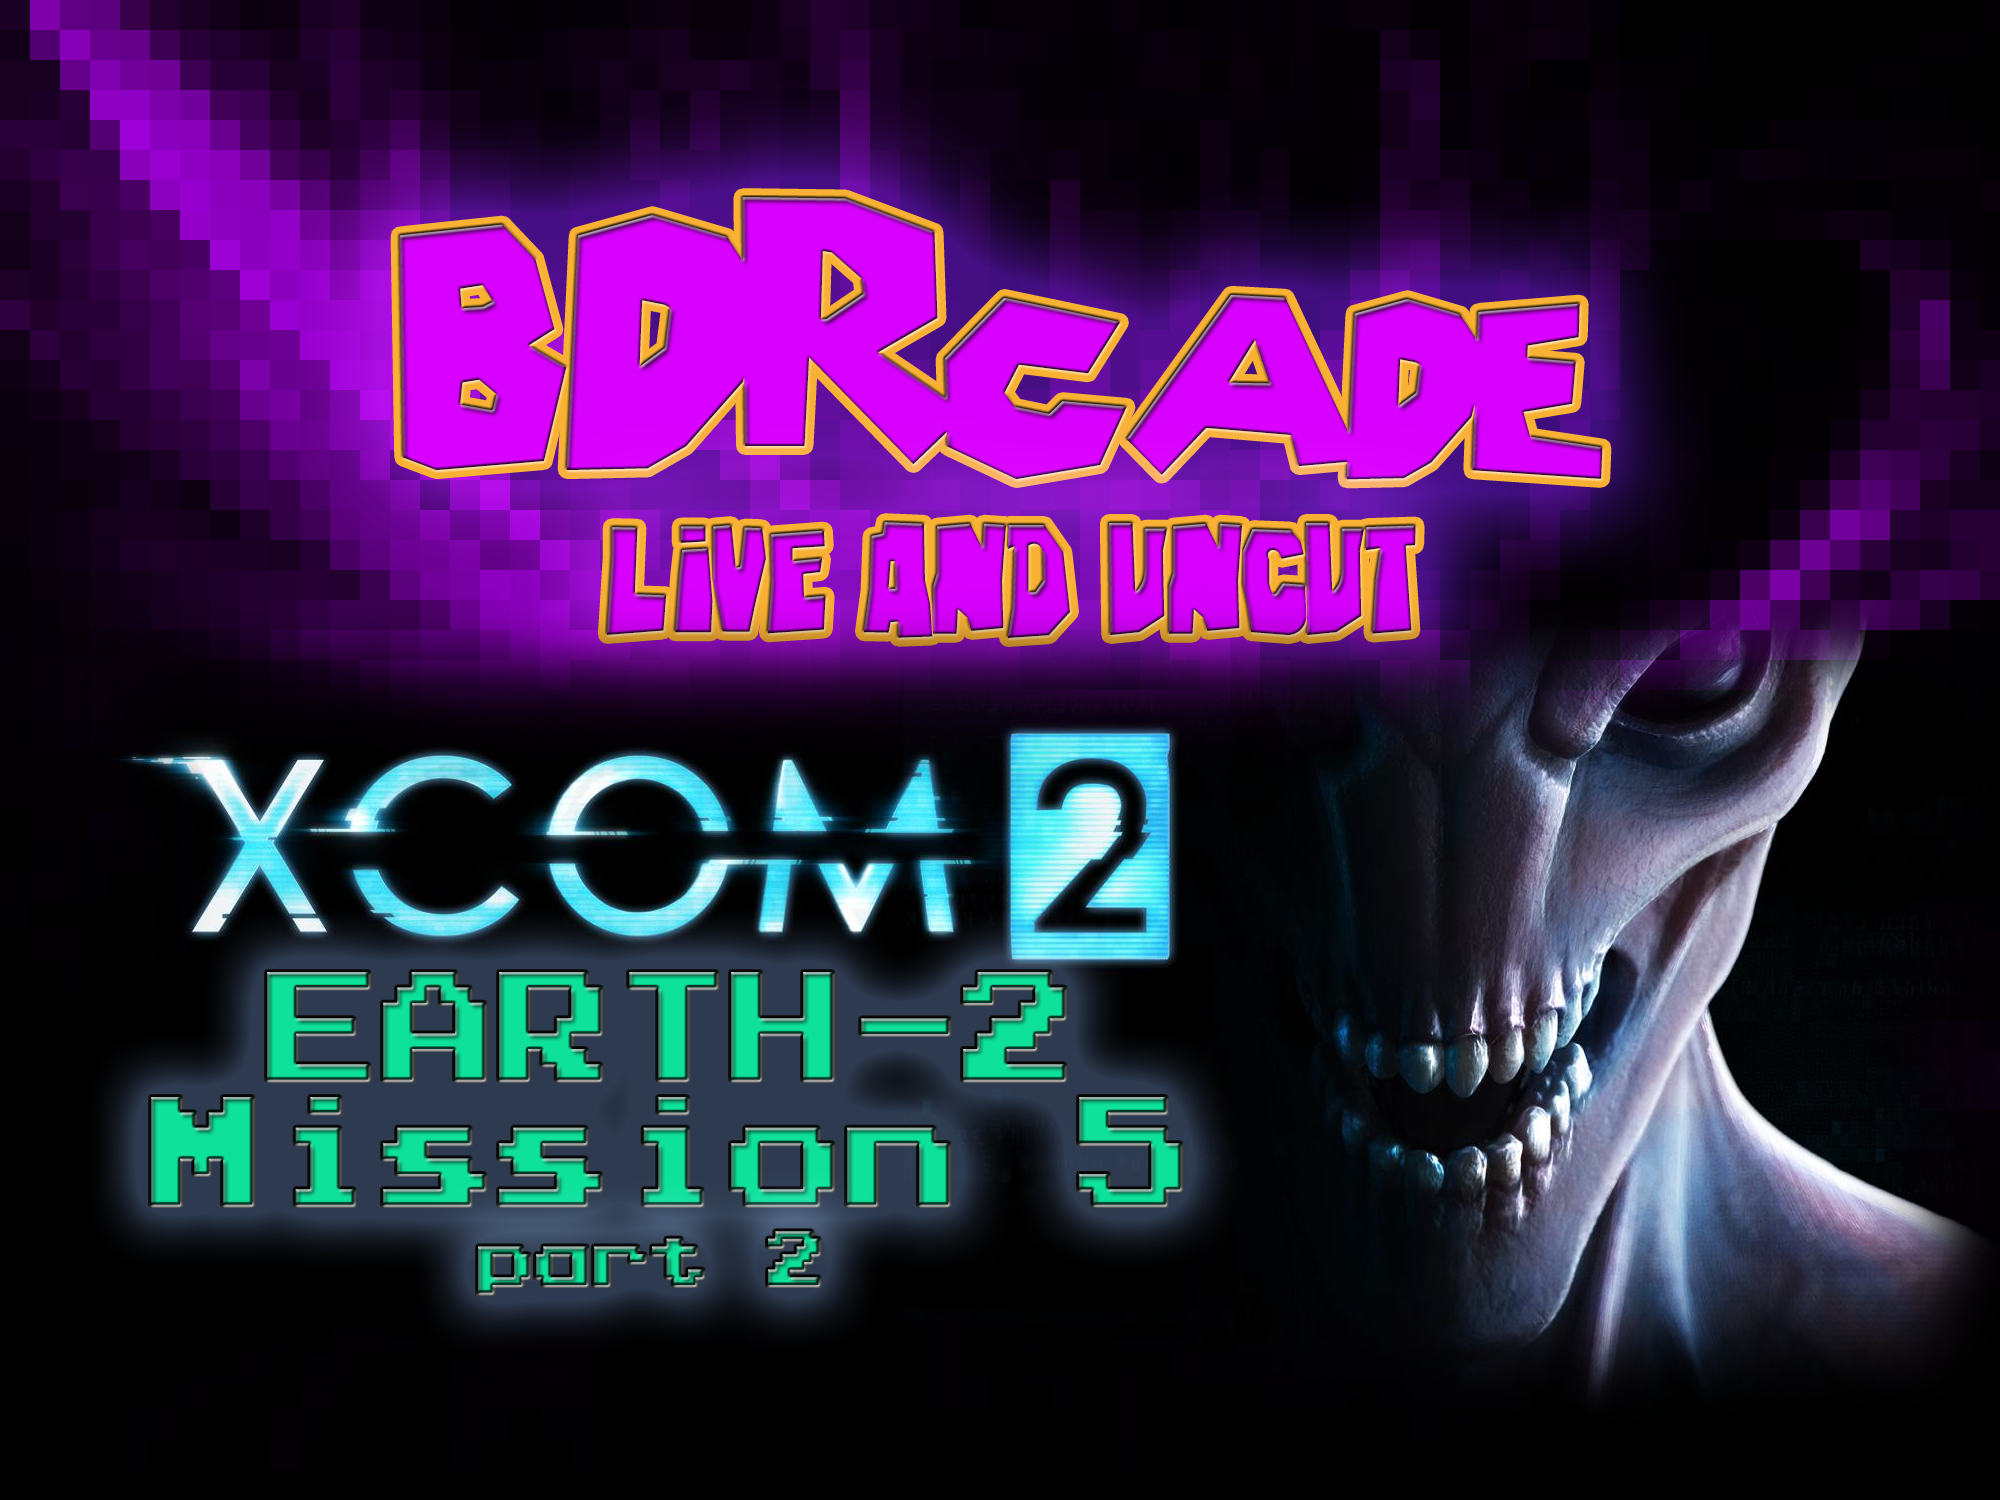 XCOM 2 (Earth-2) : Mission 5 Part 2 – A BDRcade Live Stream